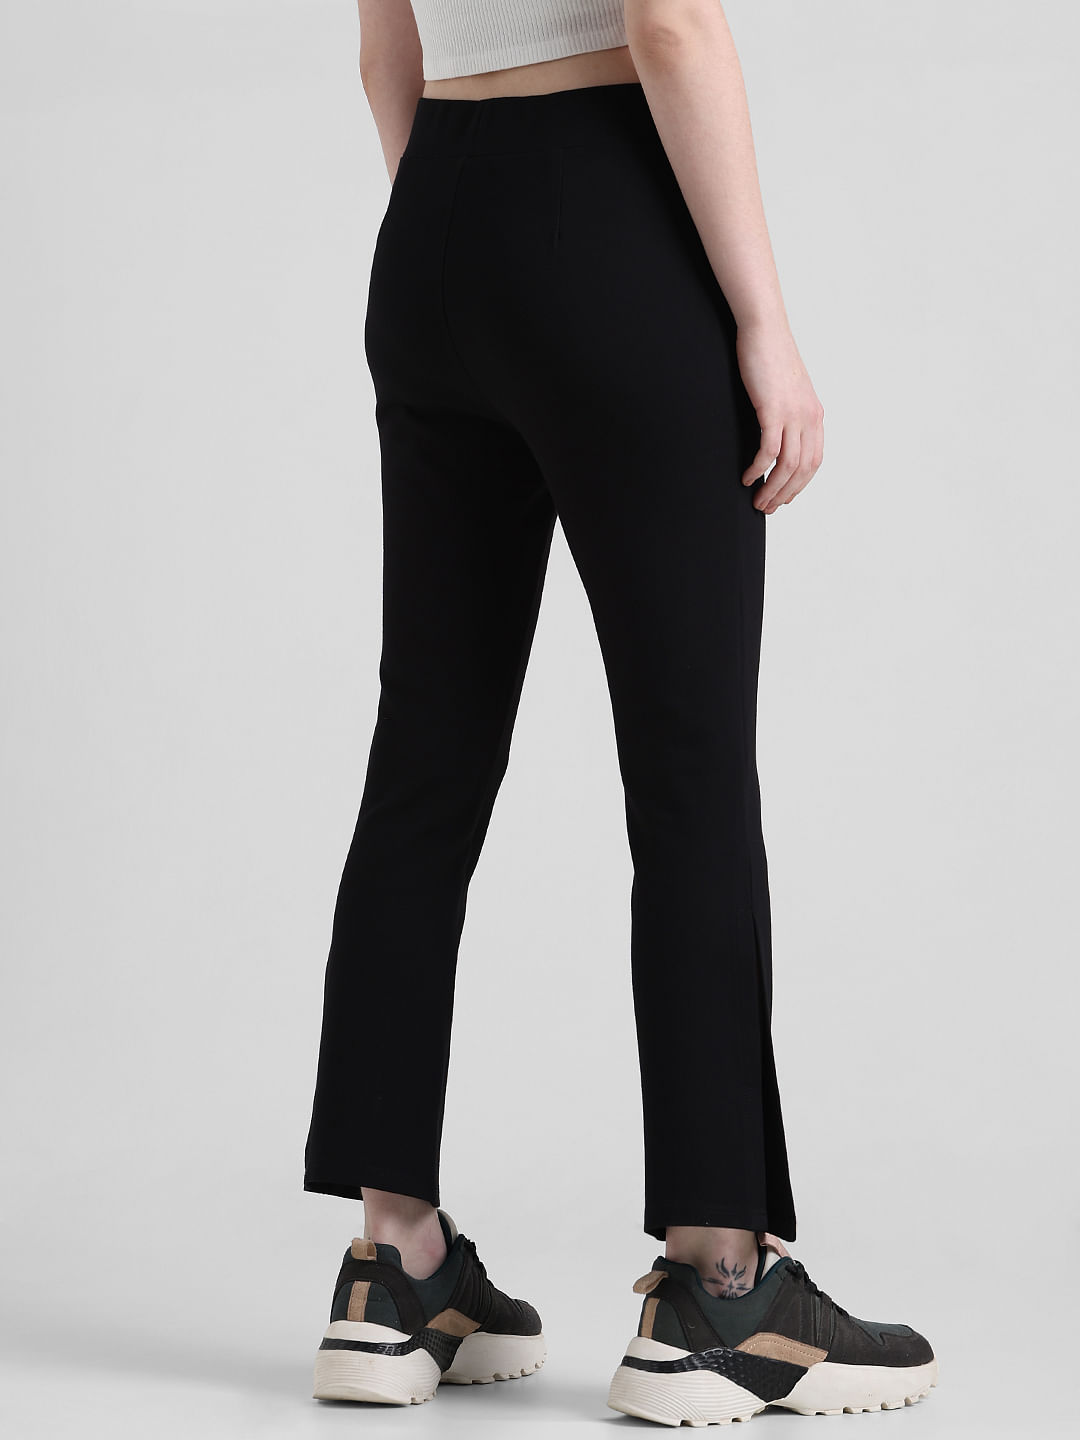 Shop Prisma's Black Cuff Length Leggings for Ultimate Comfort